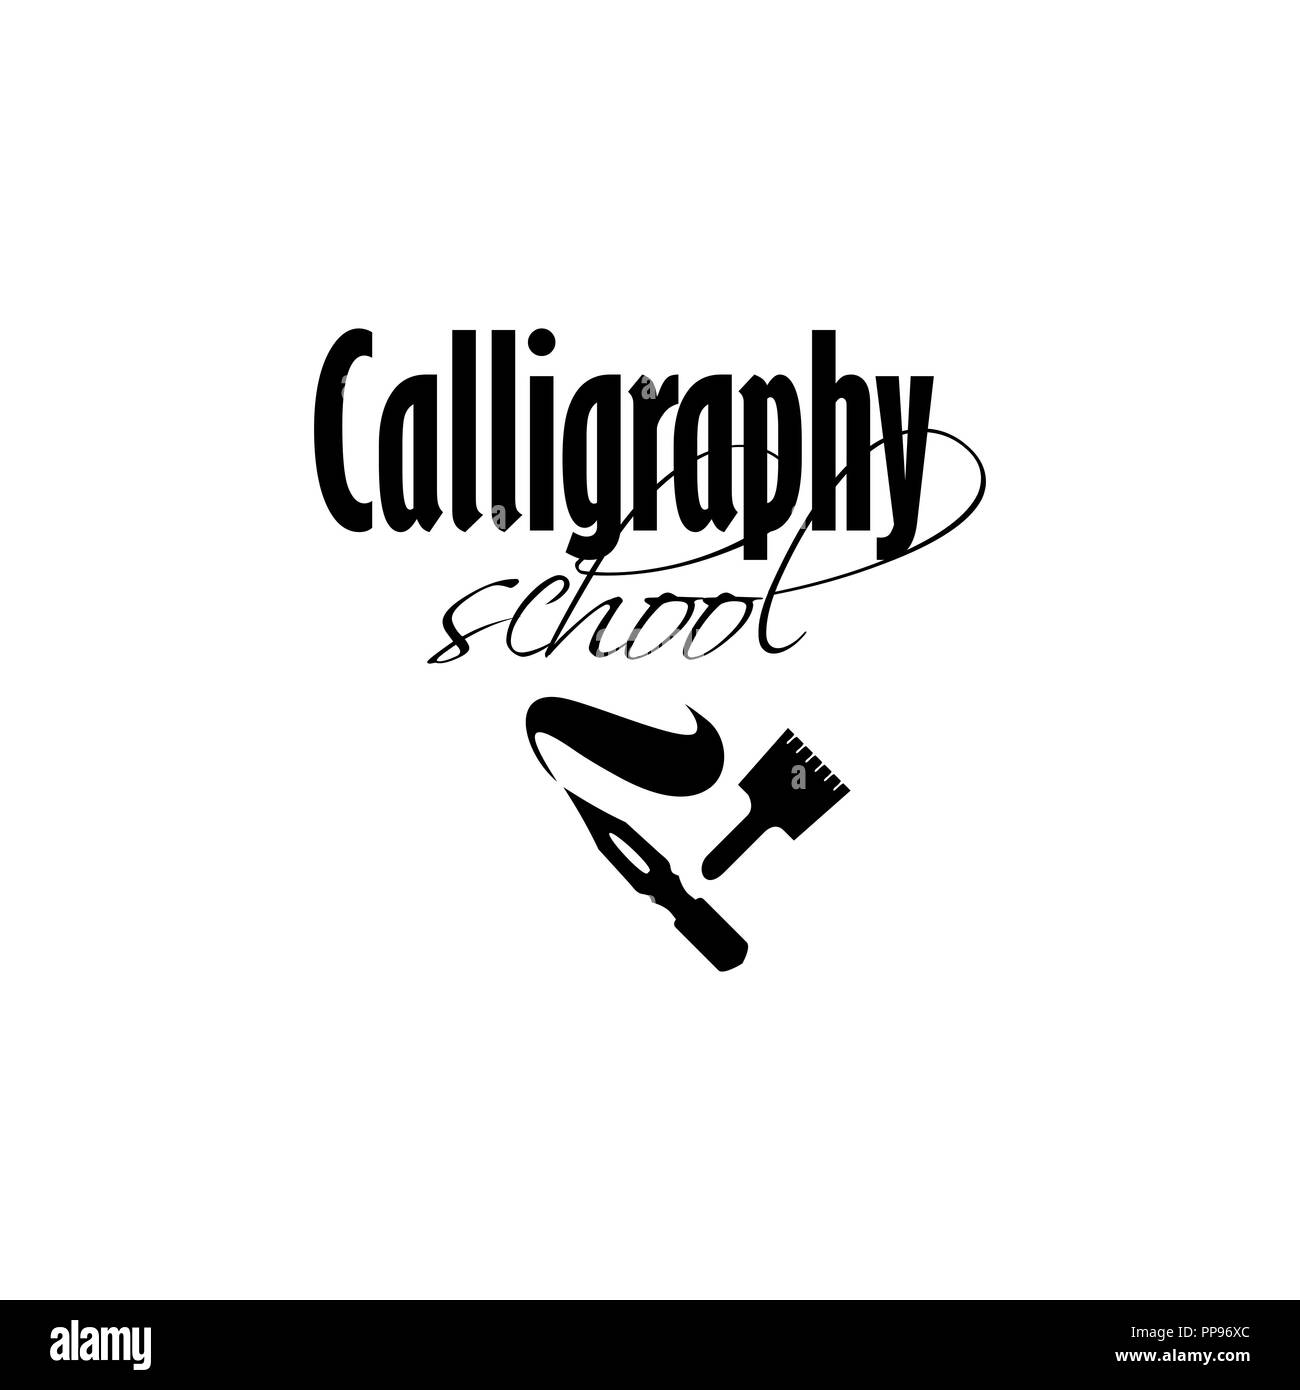 Calligraphy Designs Templates